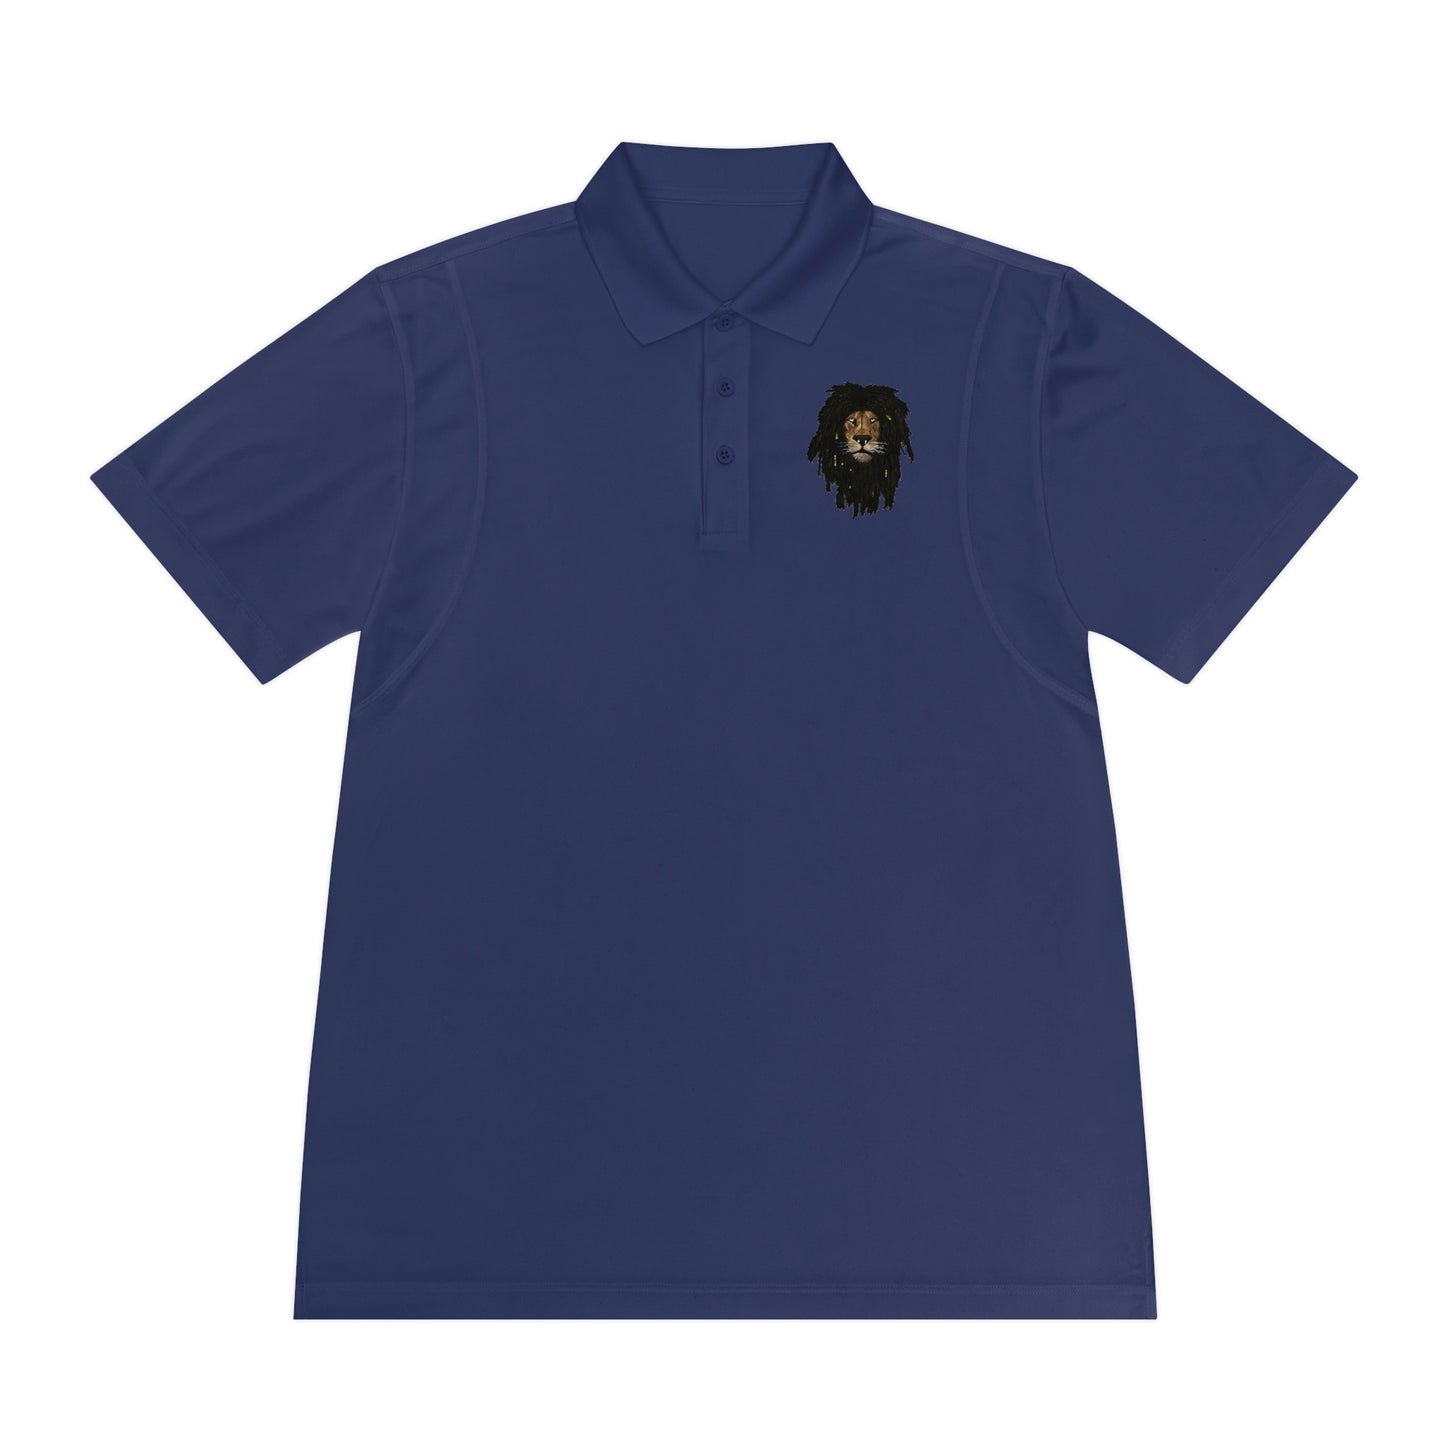 Men's Sport Polo Shirt - Lion Head